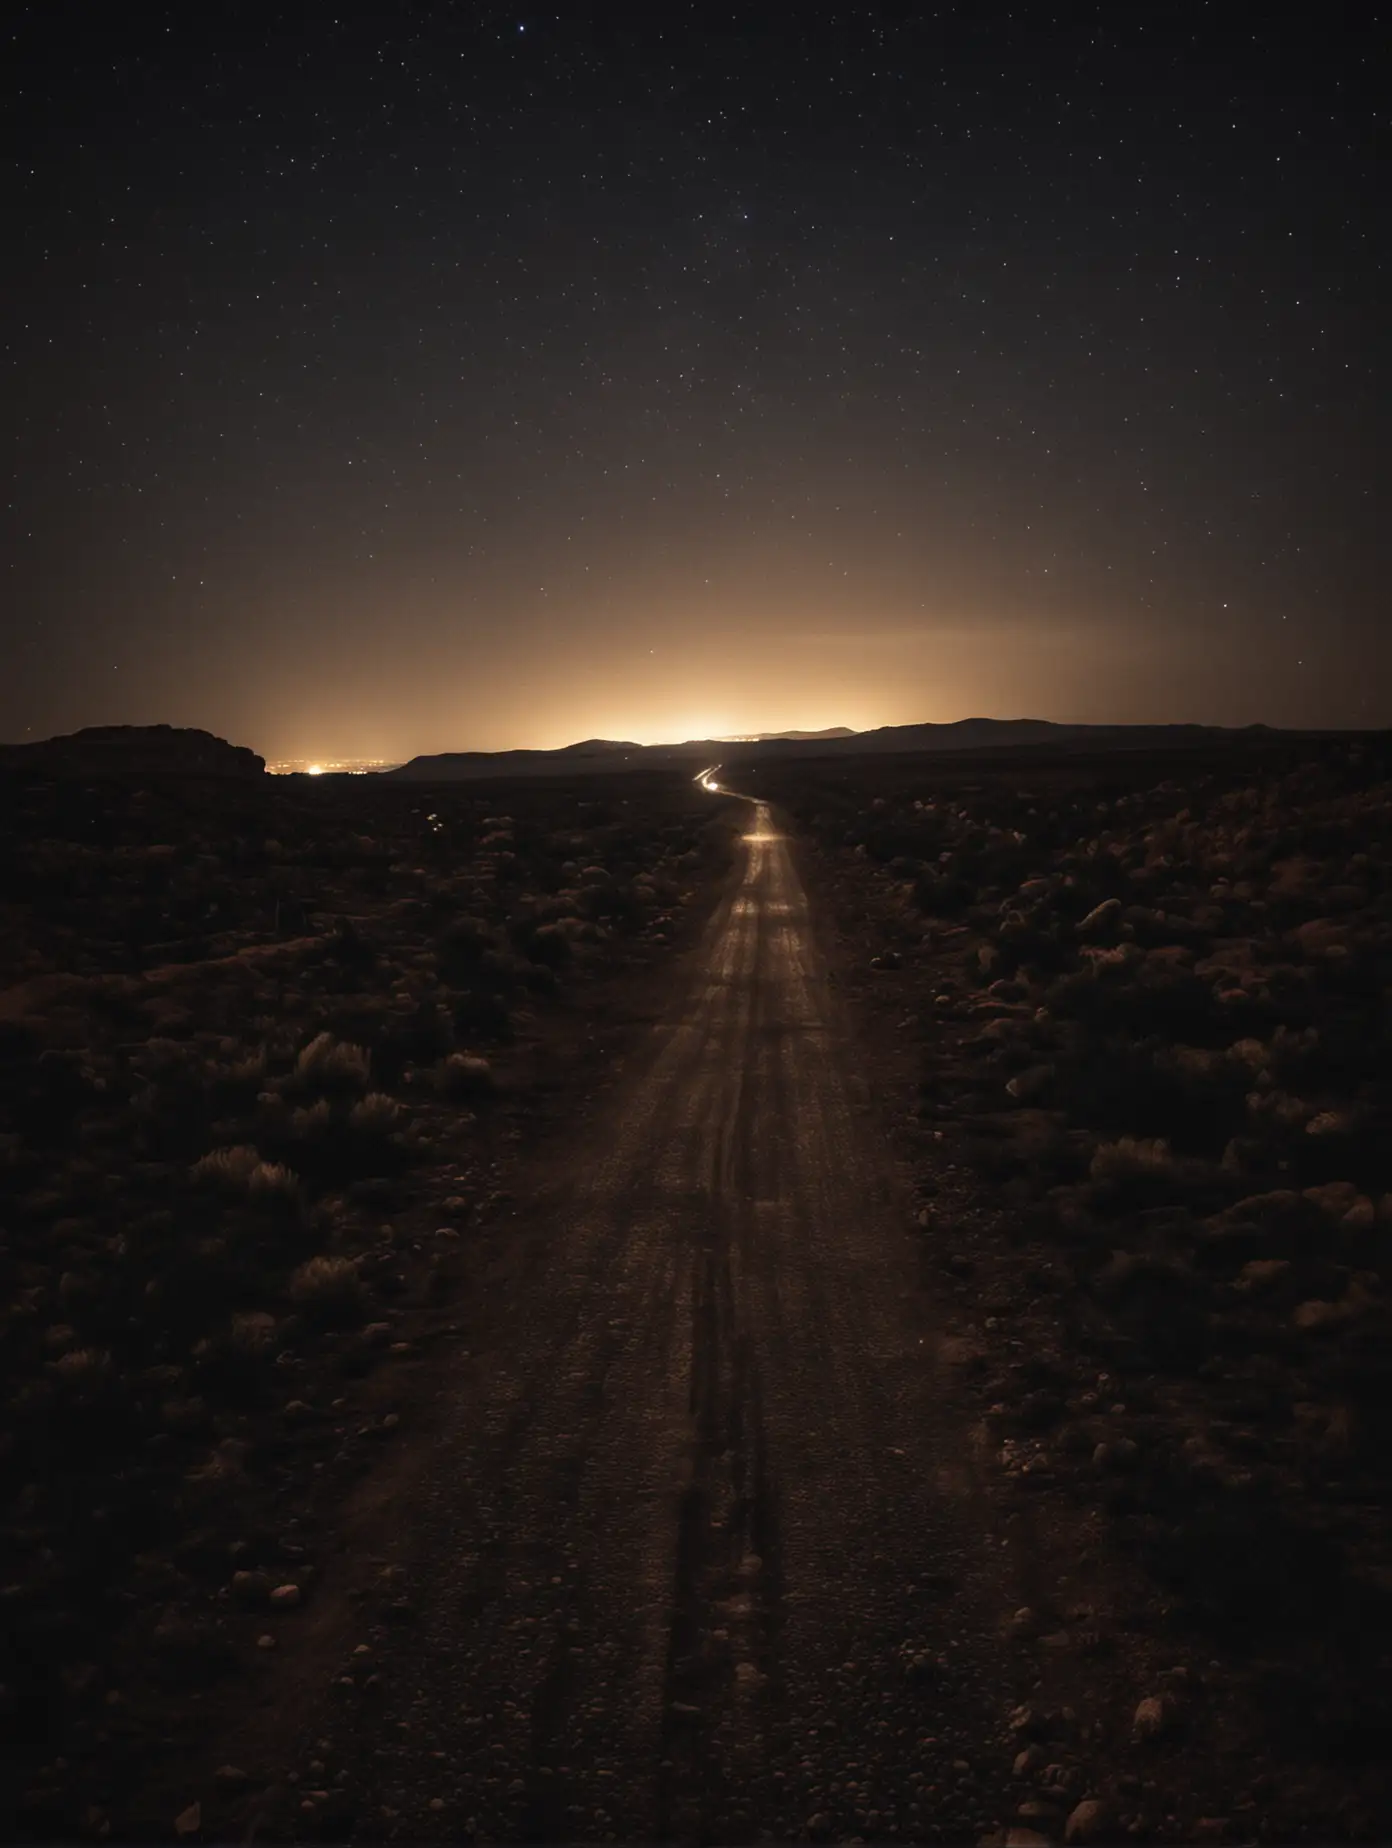 dark Road at night in the desert in Israel